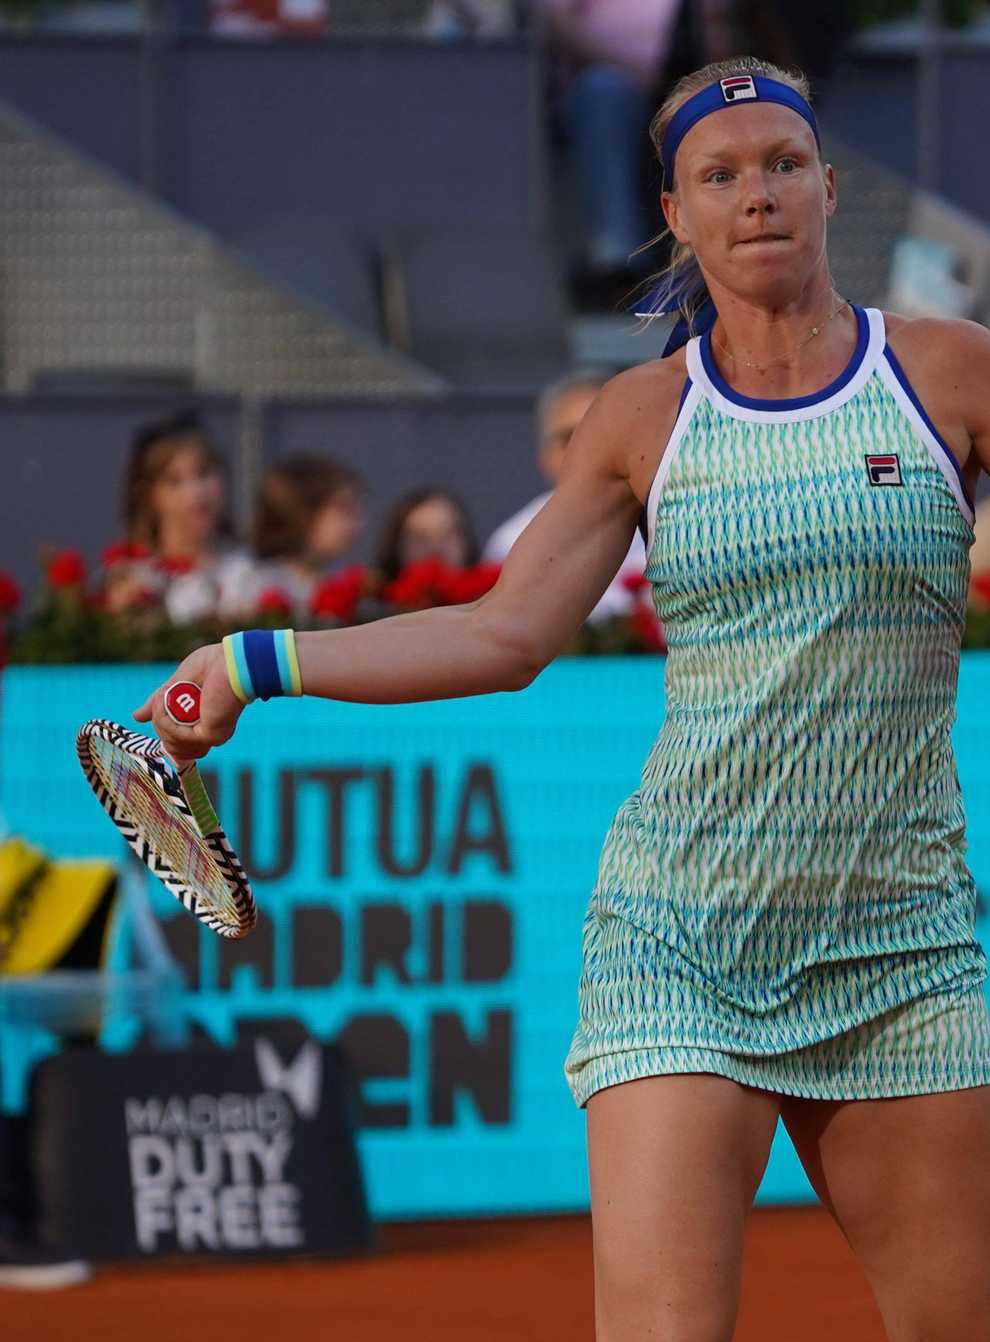 Kiki Bertens won the women’s singles title at the Madrid Open in 2019